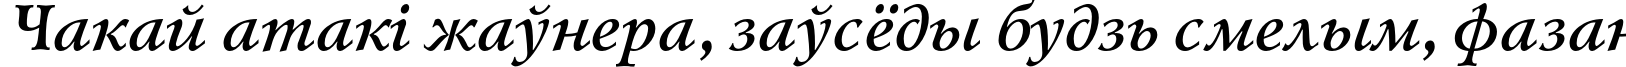 Пример написания шрифтом LazurskiC Bold Italic текста на белорусском